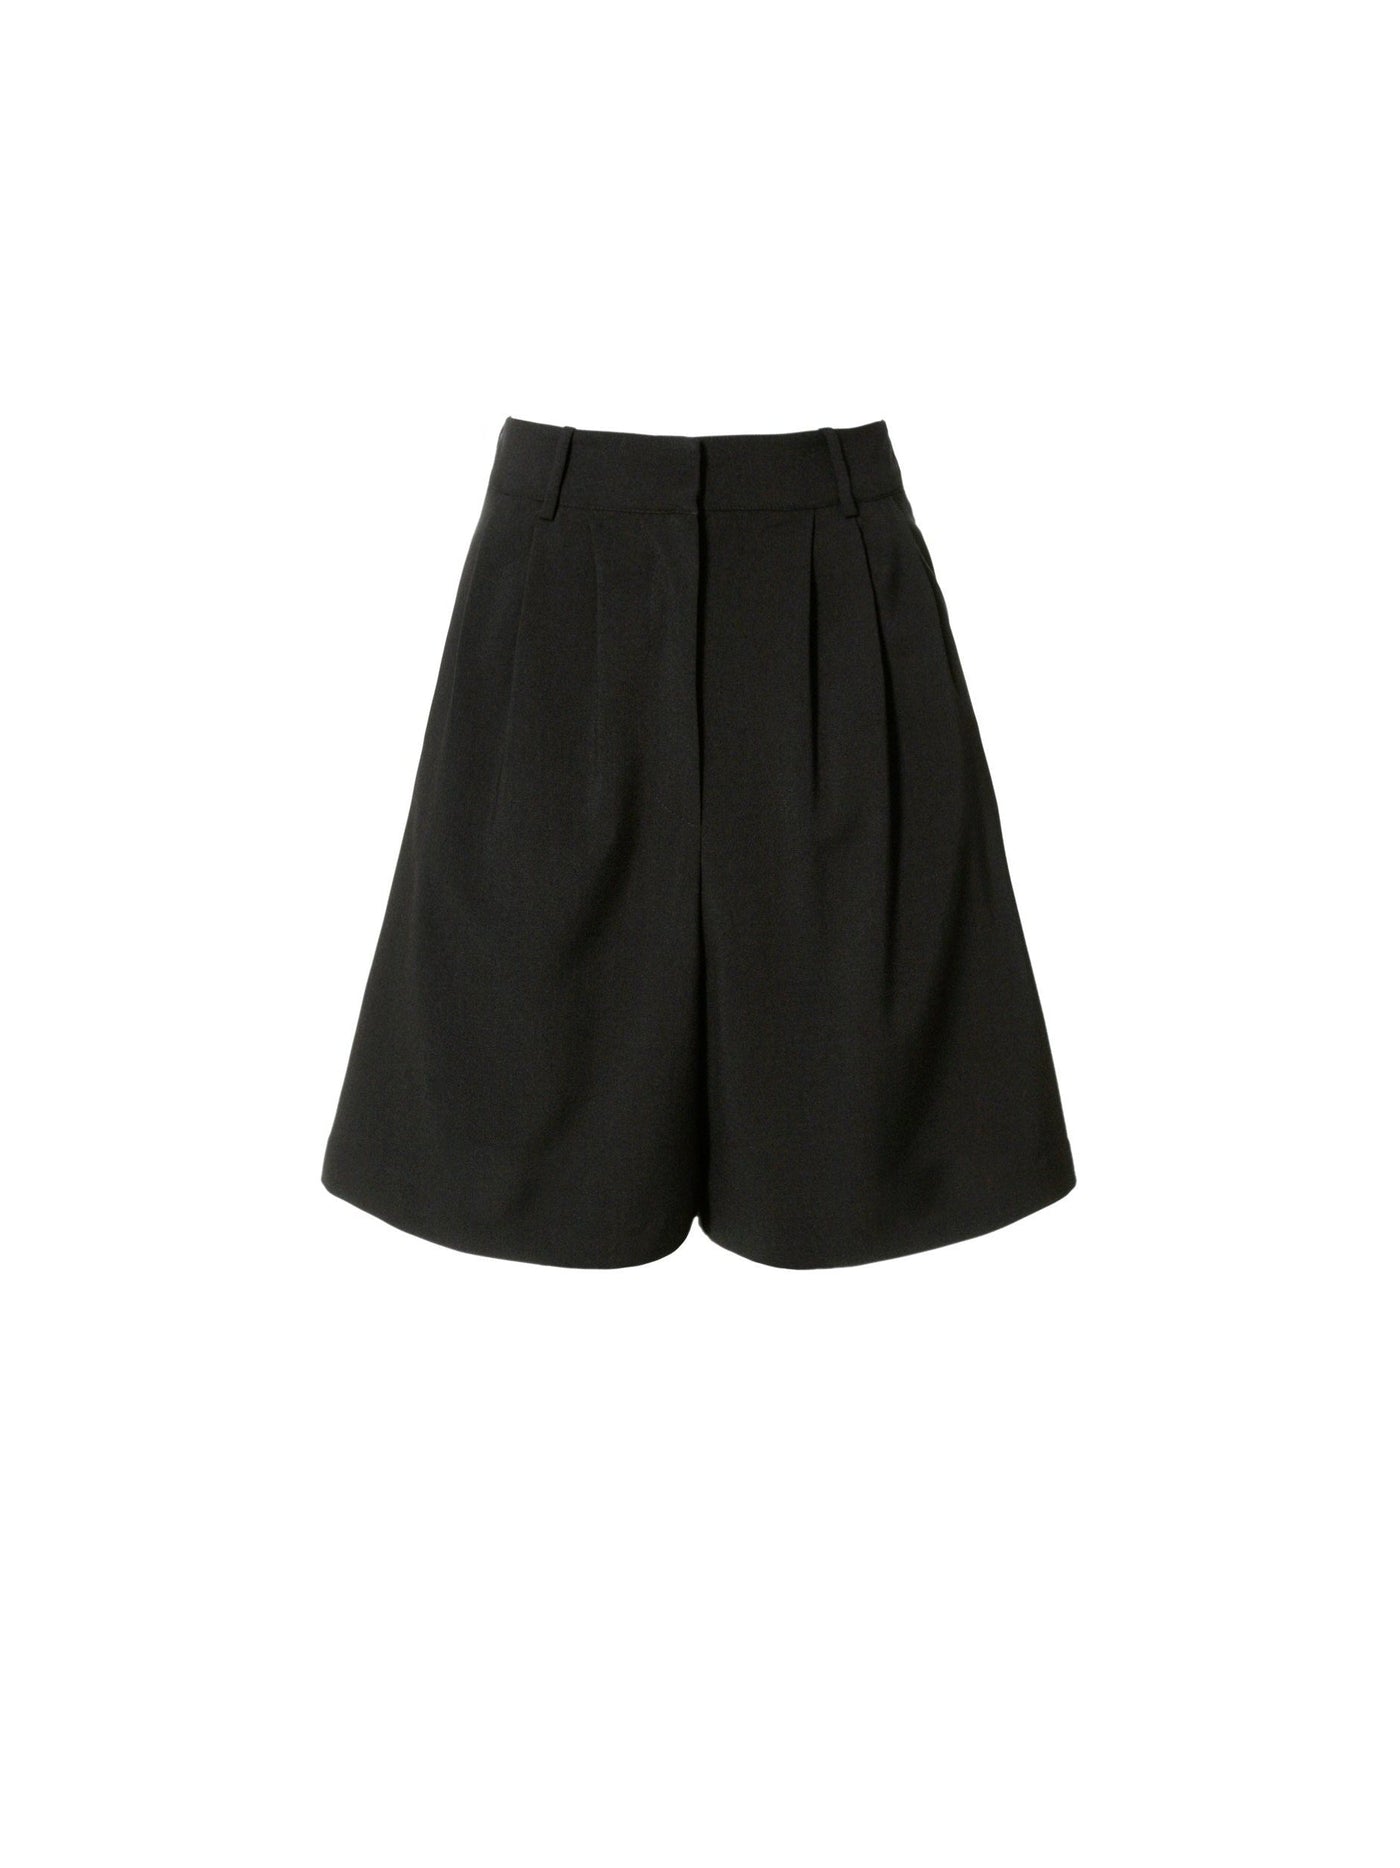 Billie Neutral Black Bermuda Shorts